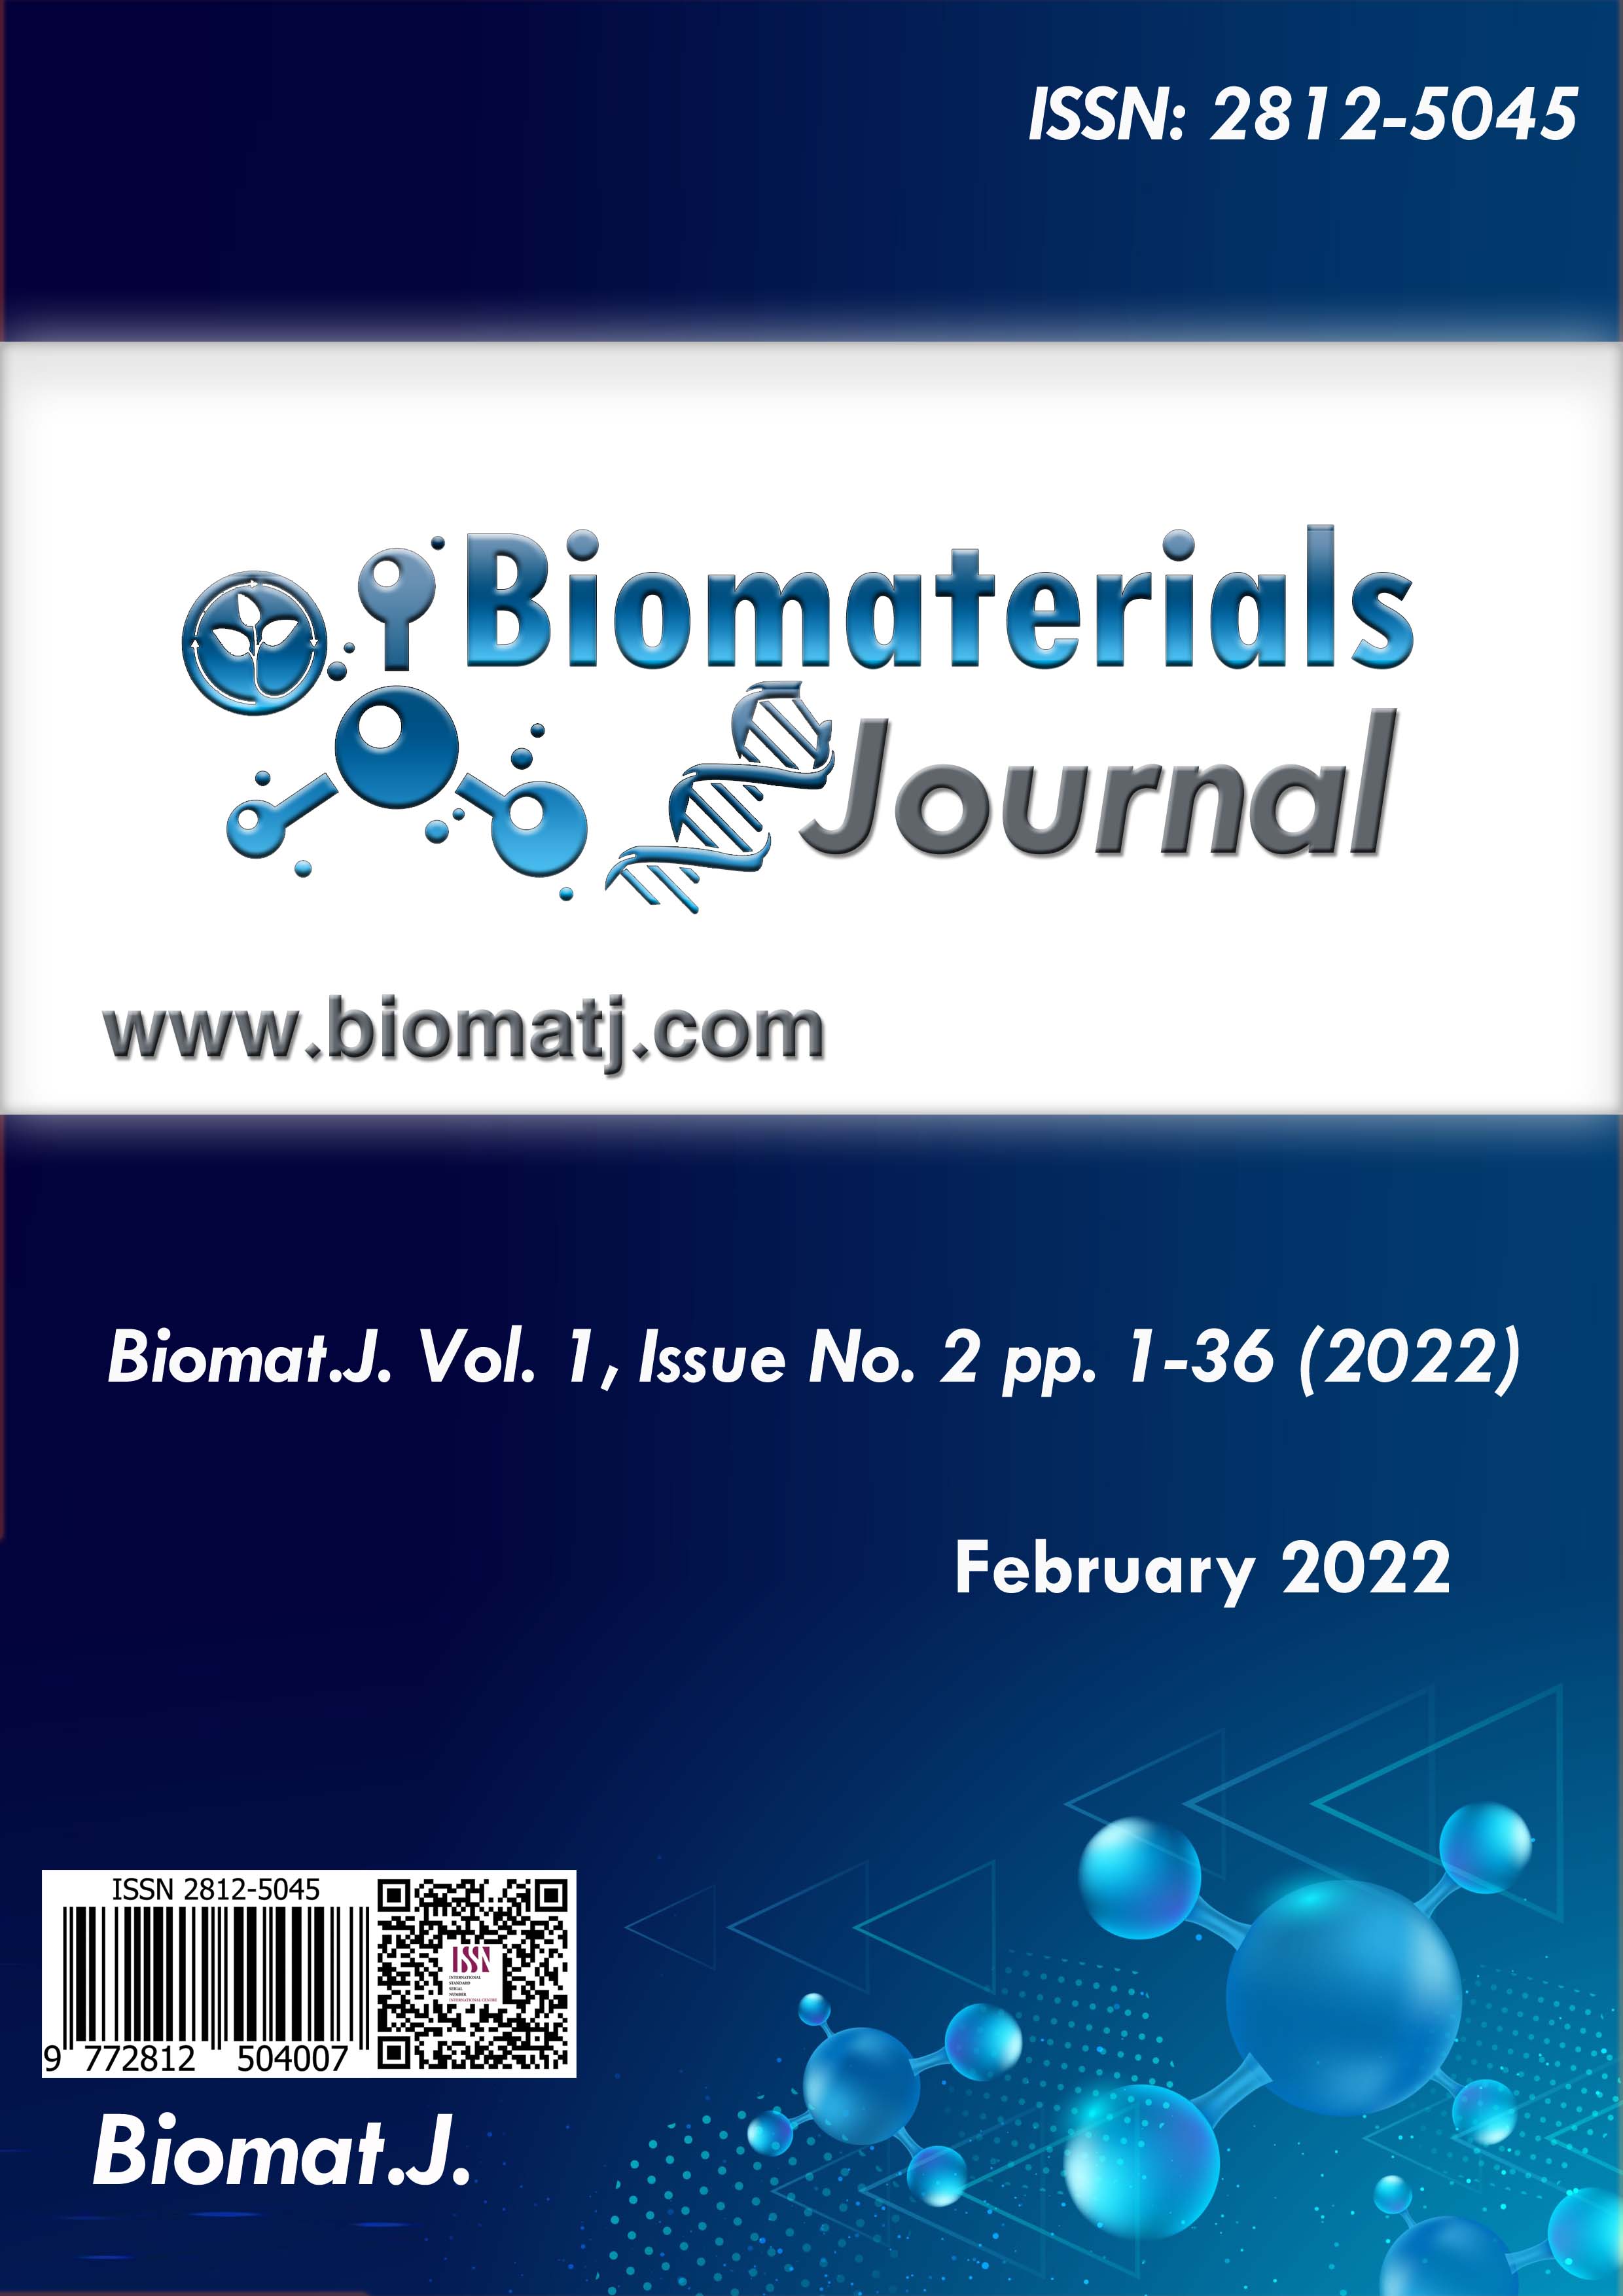 Biomaterials Journal Volume 1, Issue No. 2, February 2022